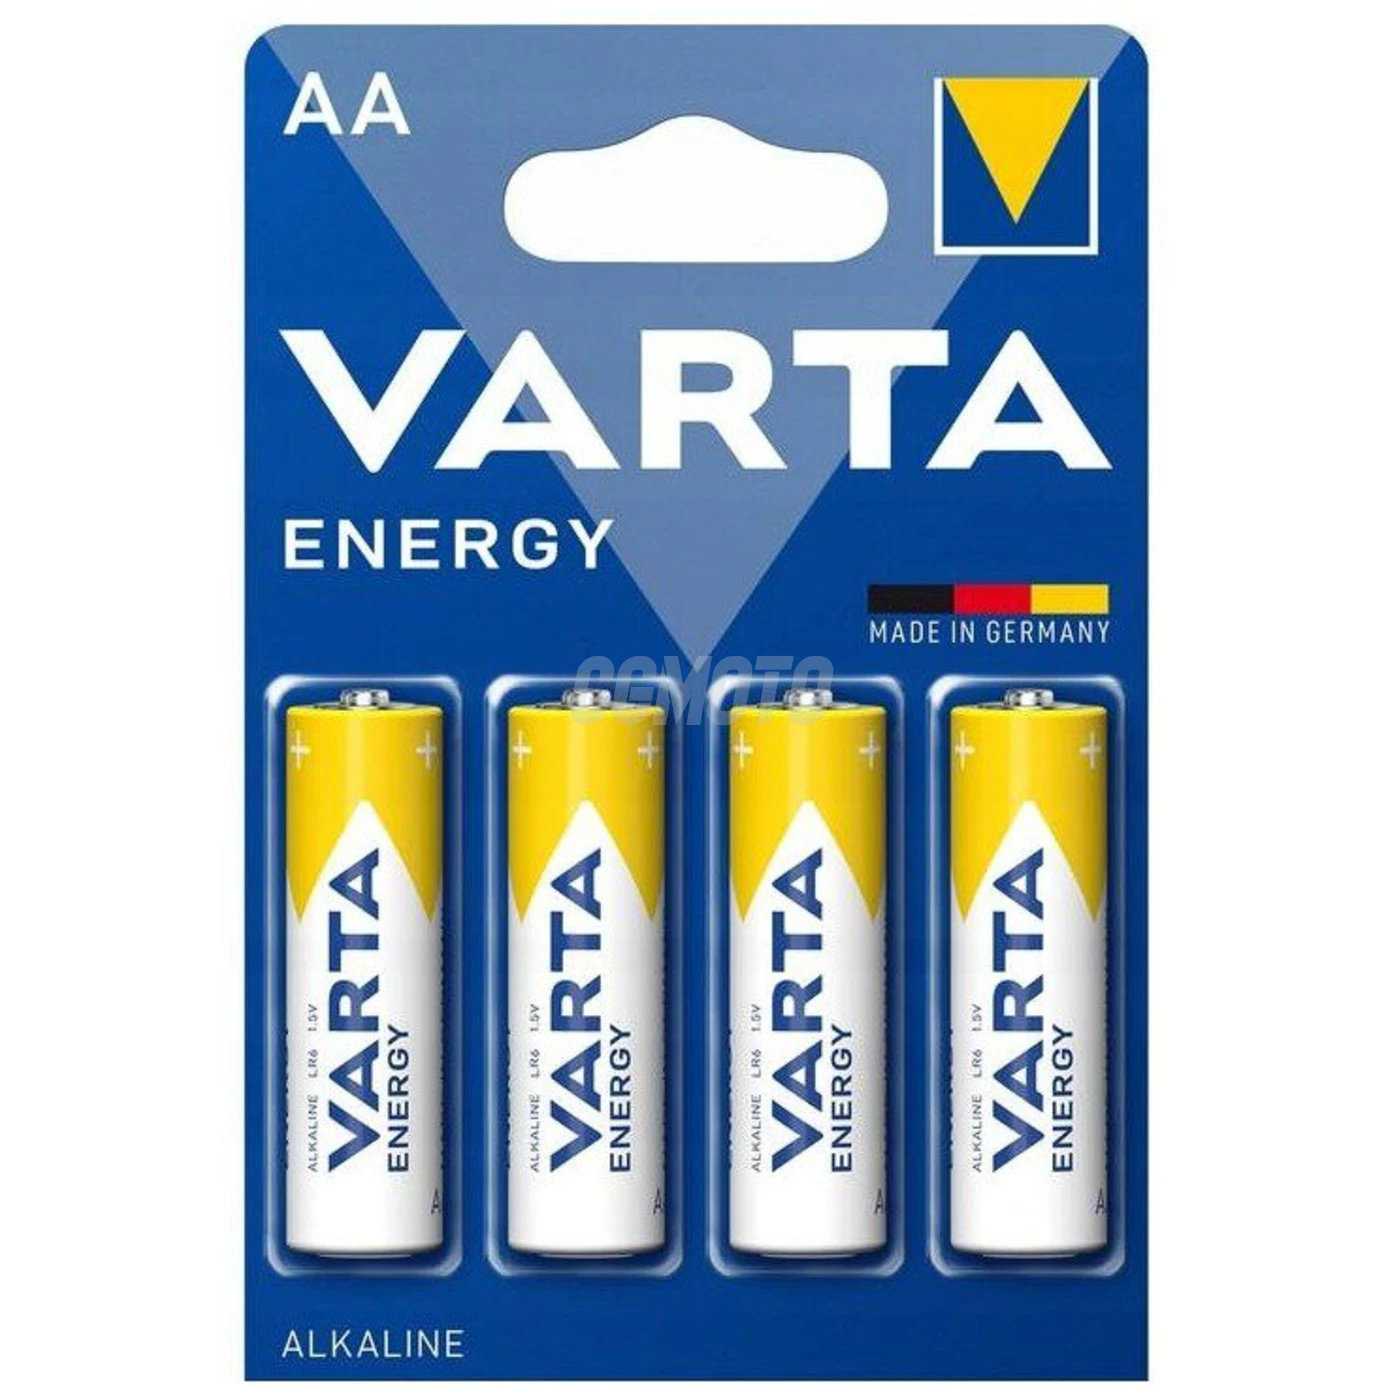 Varta ENERGY STILO/AA x 4 pile (blister)